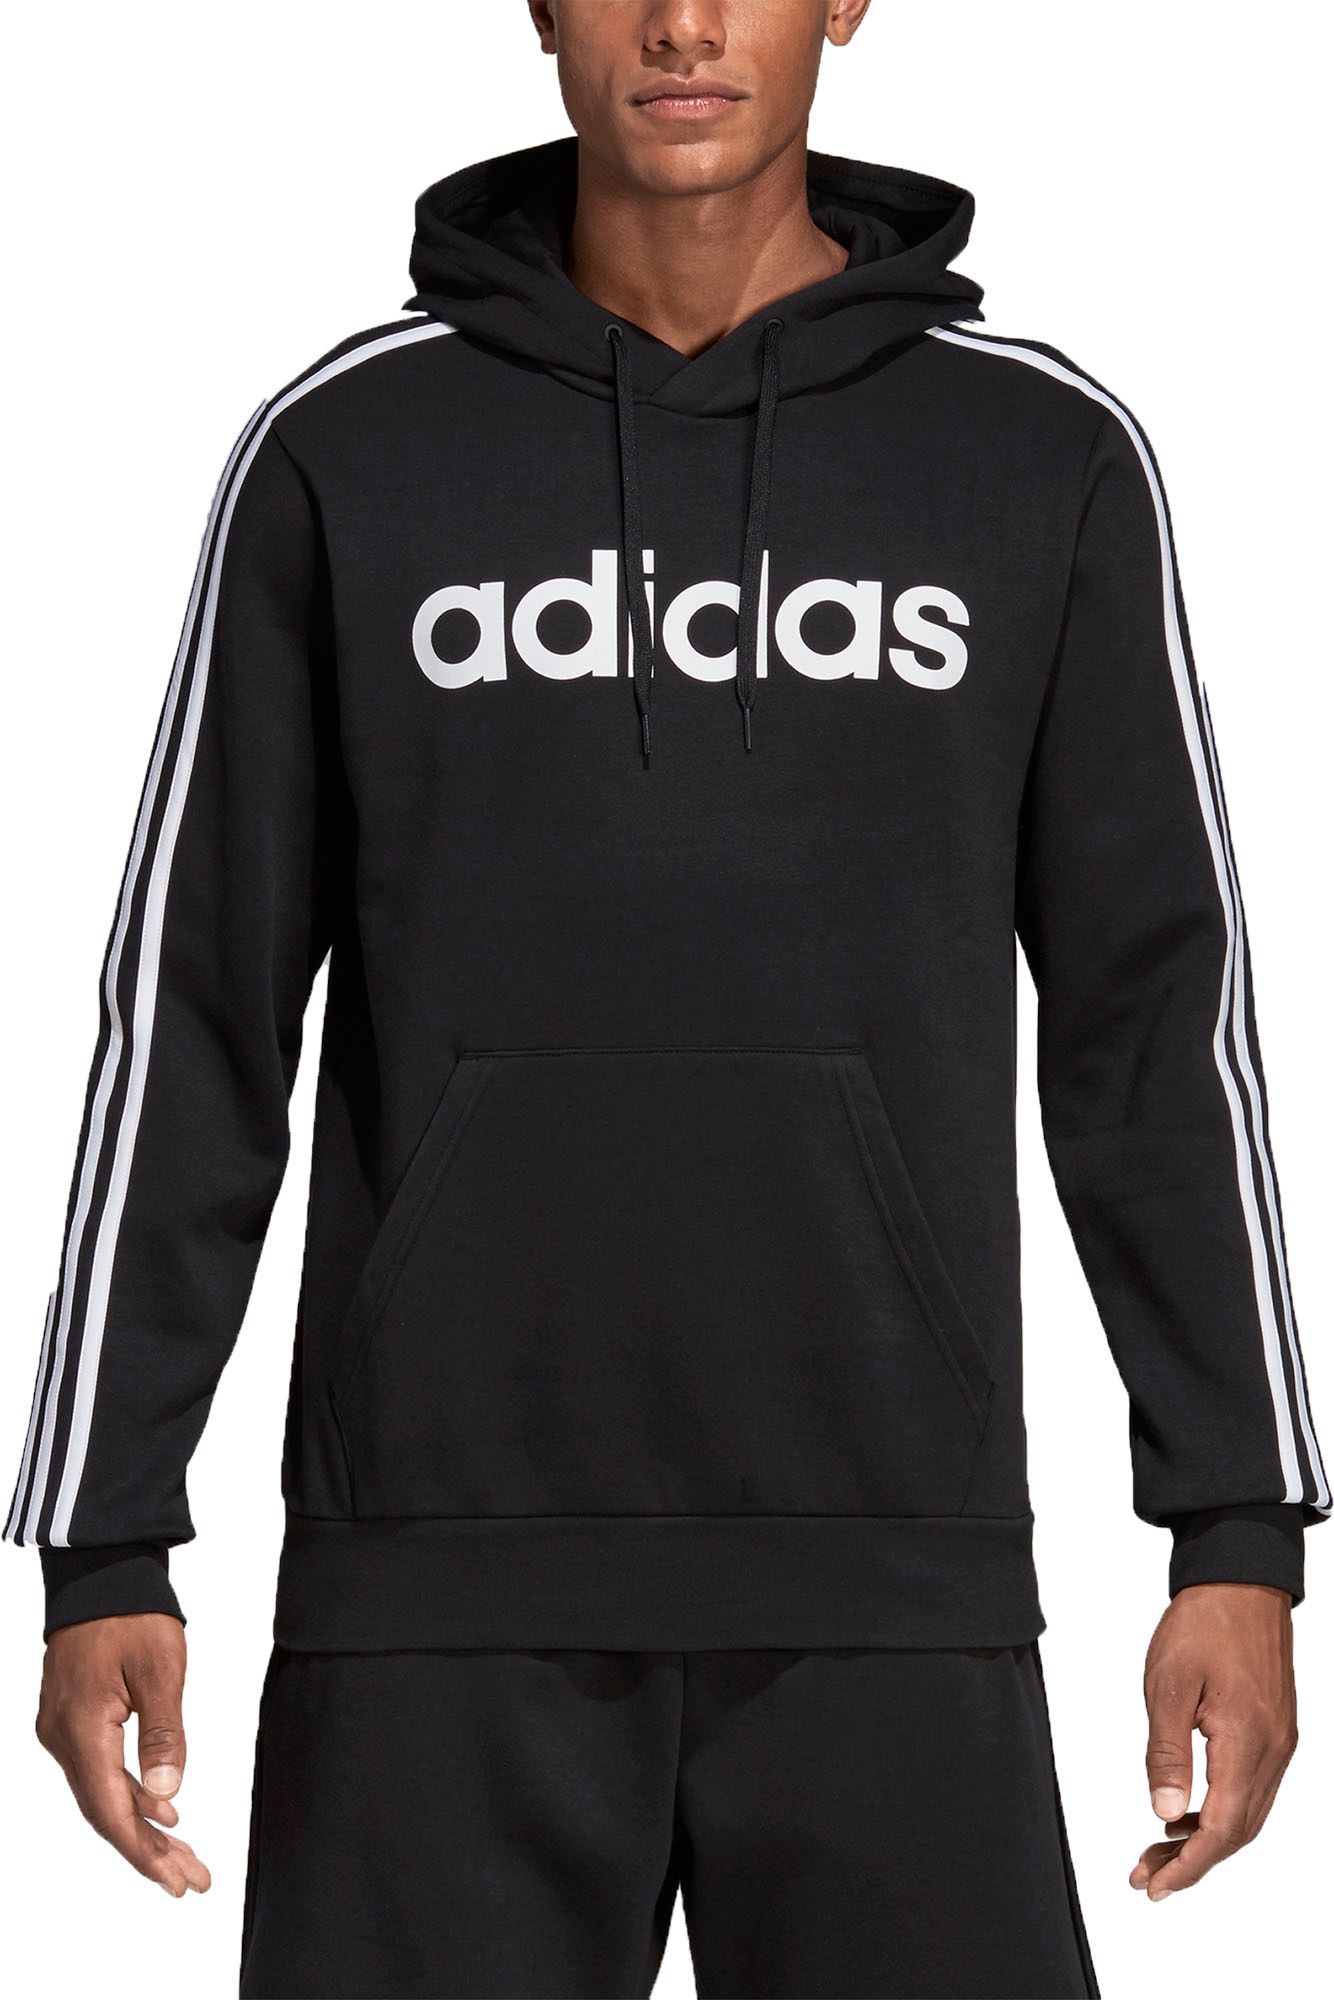 adidas essentials pullover hoodie men's